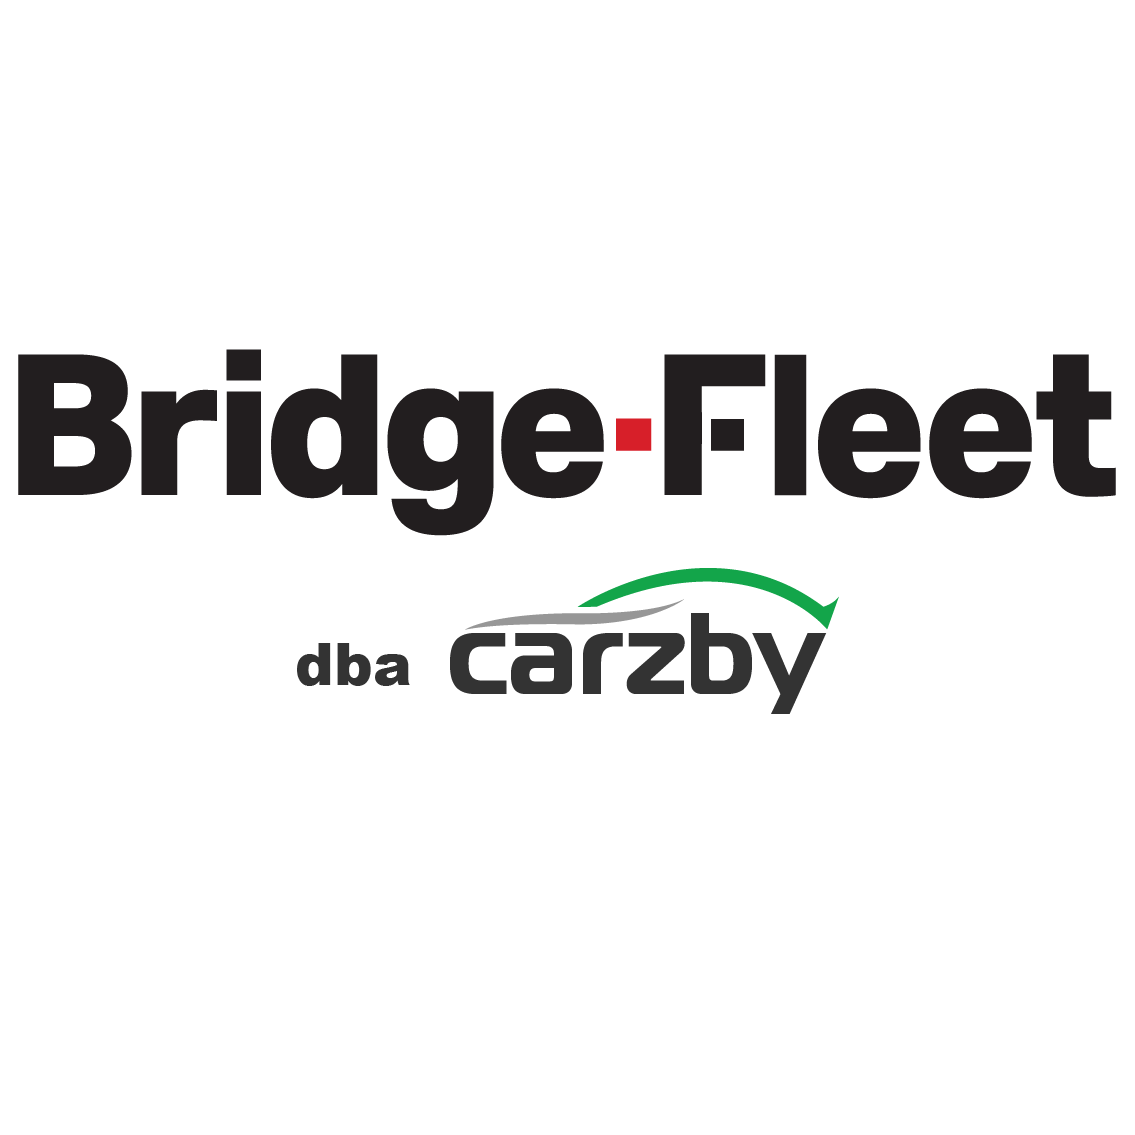 Bridge-Fleet, LLC dba Carzby